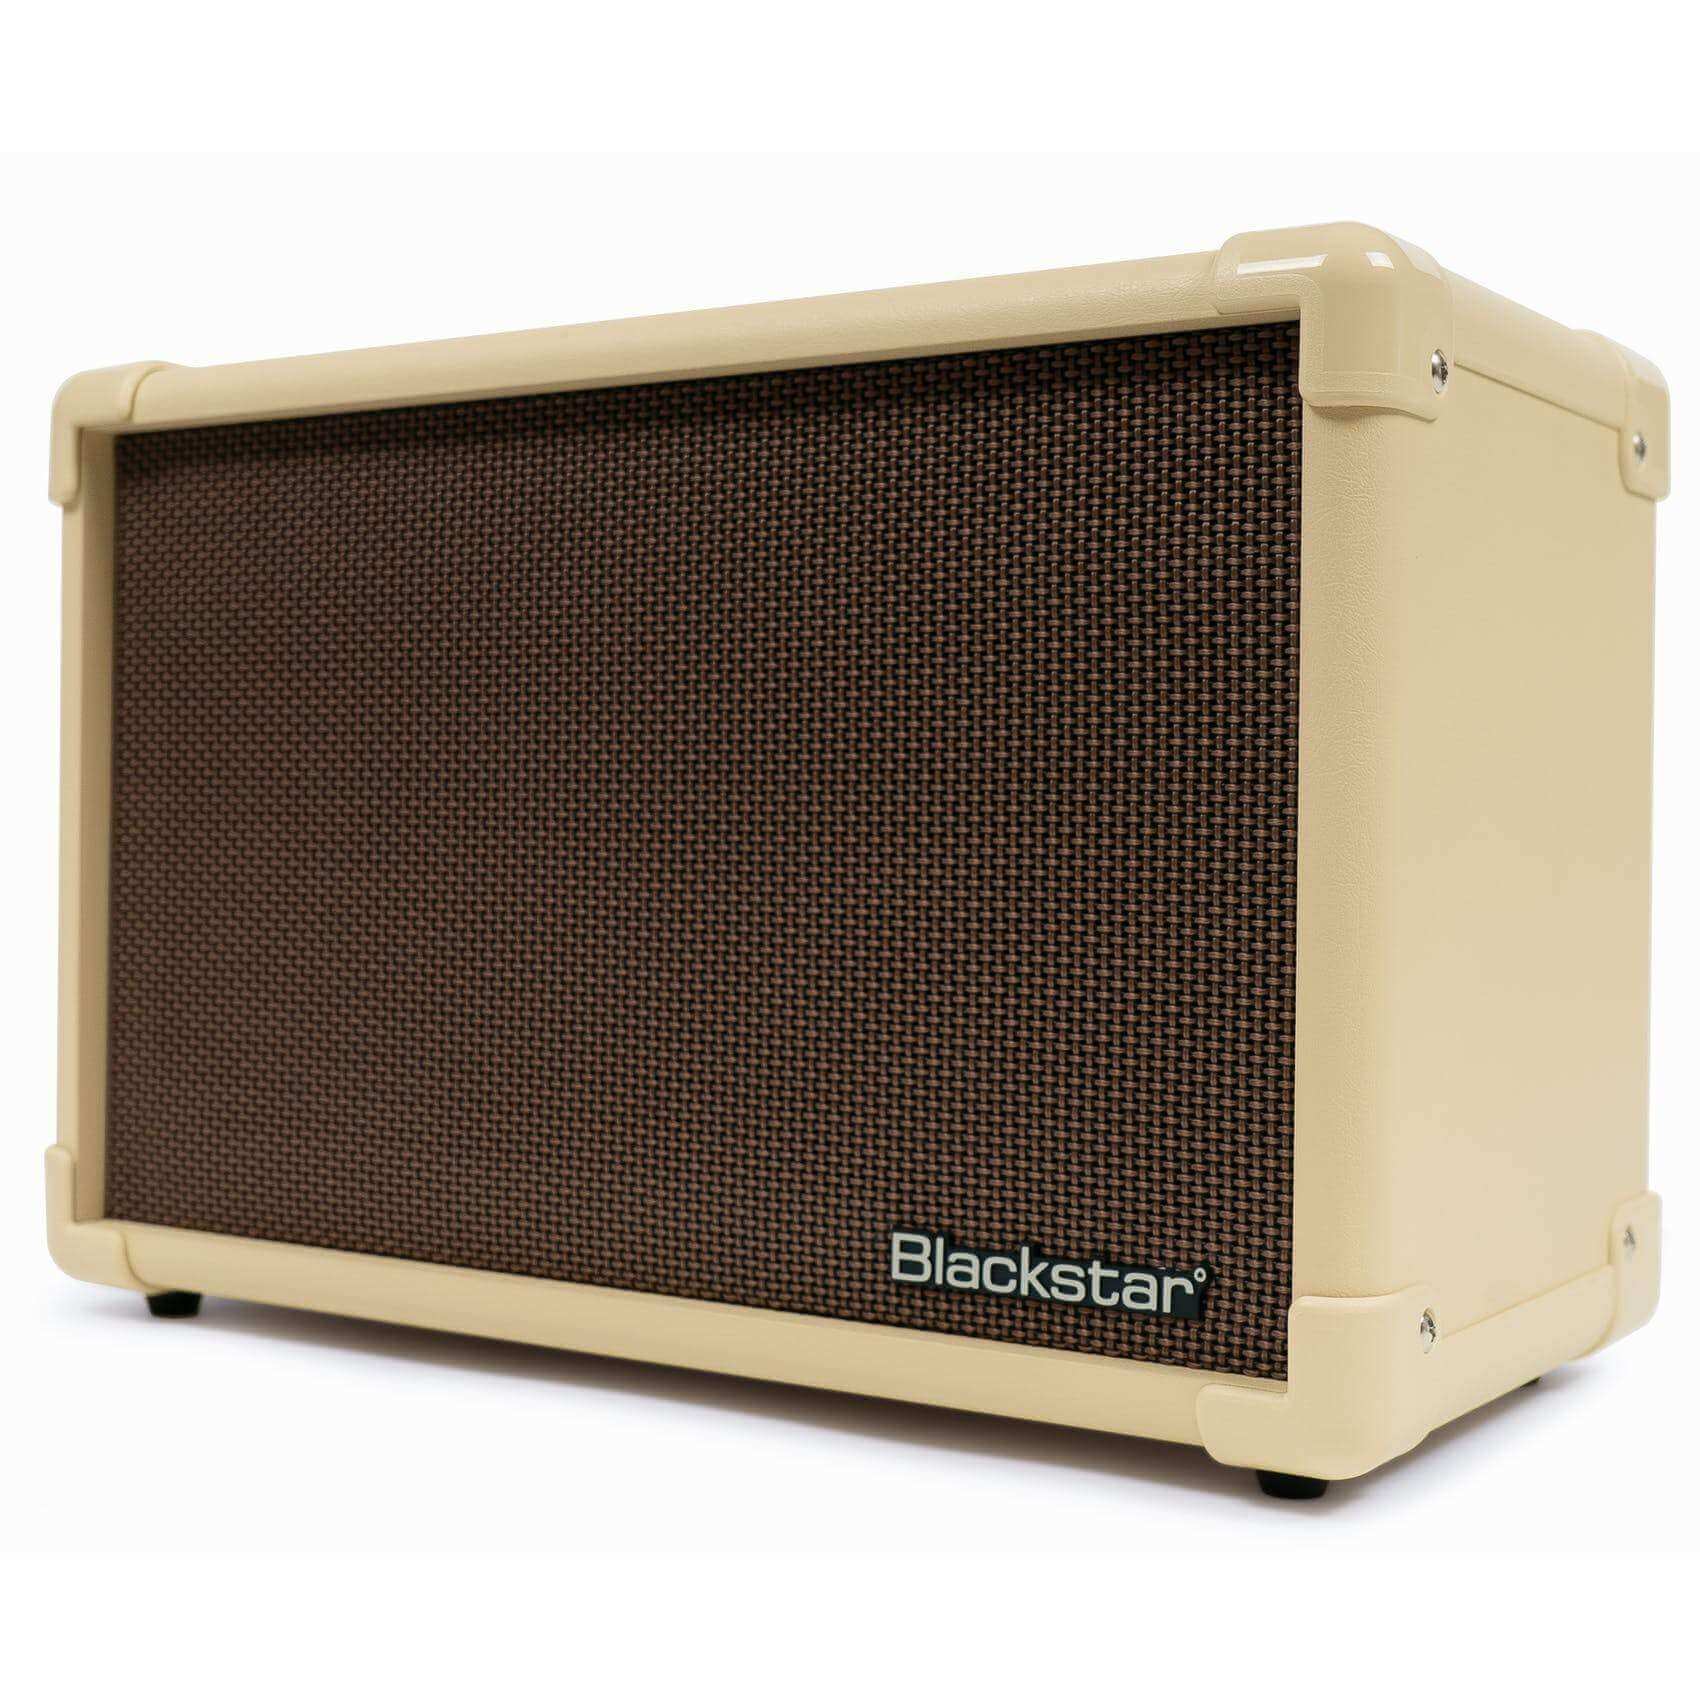 Blackstar Amplifier Blackstar Acoustic 30 Amplifier